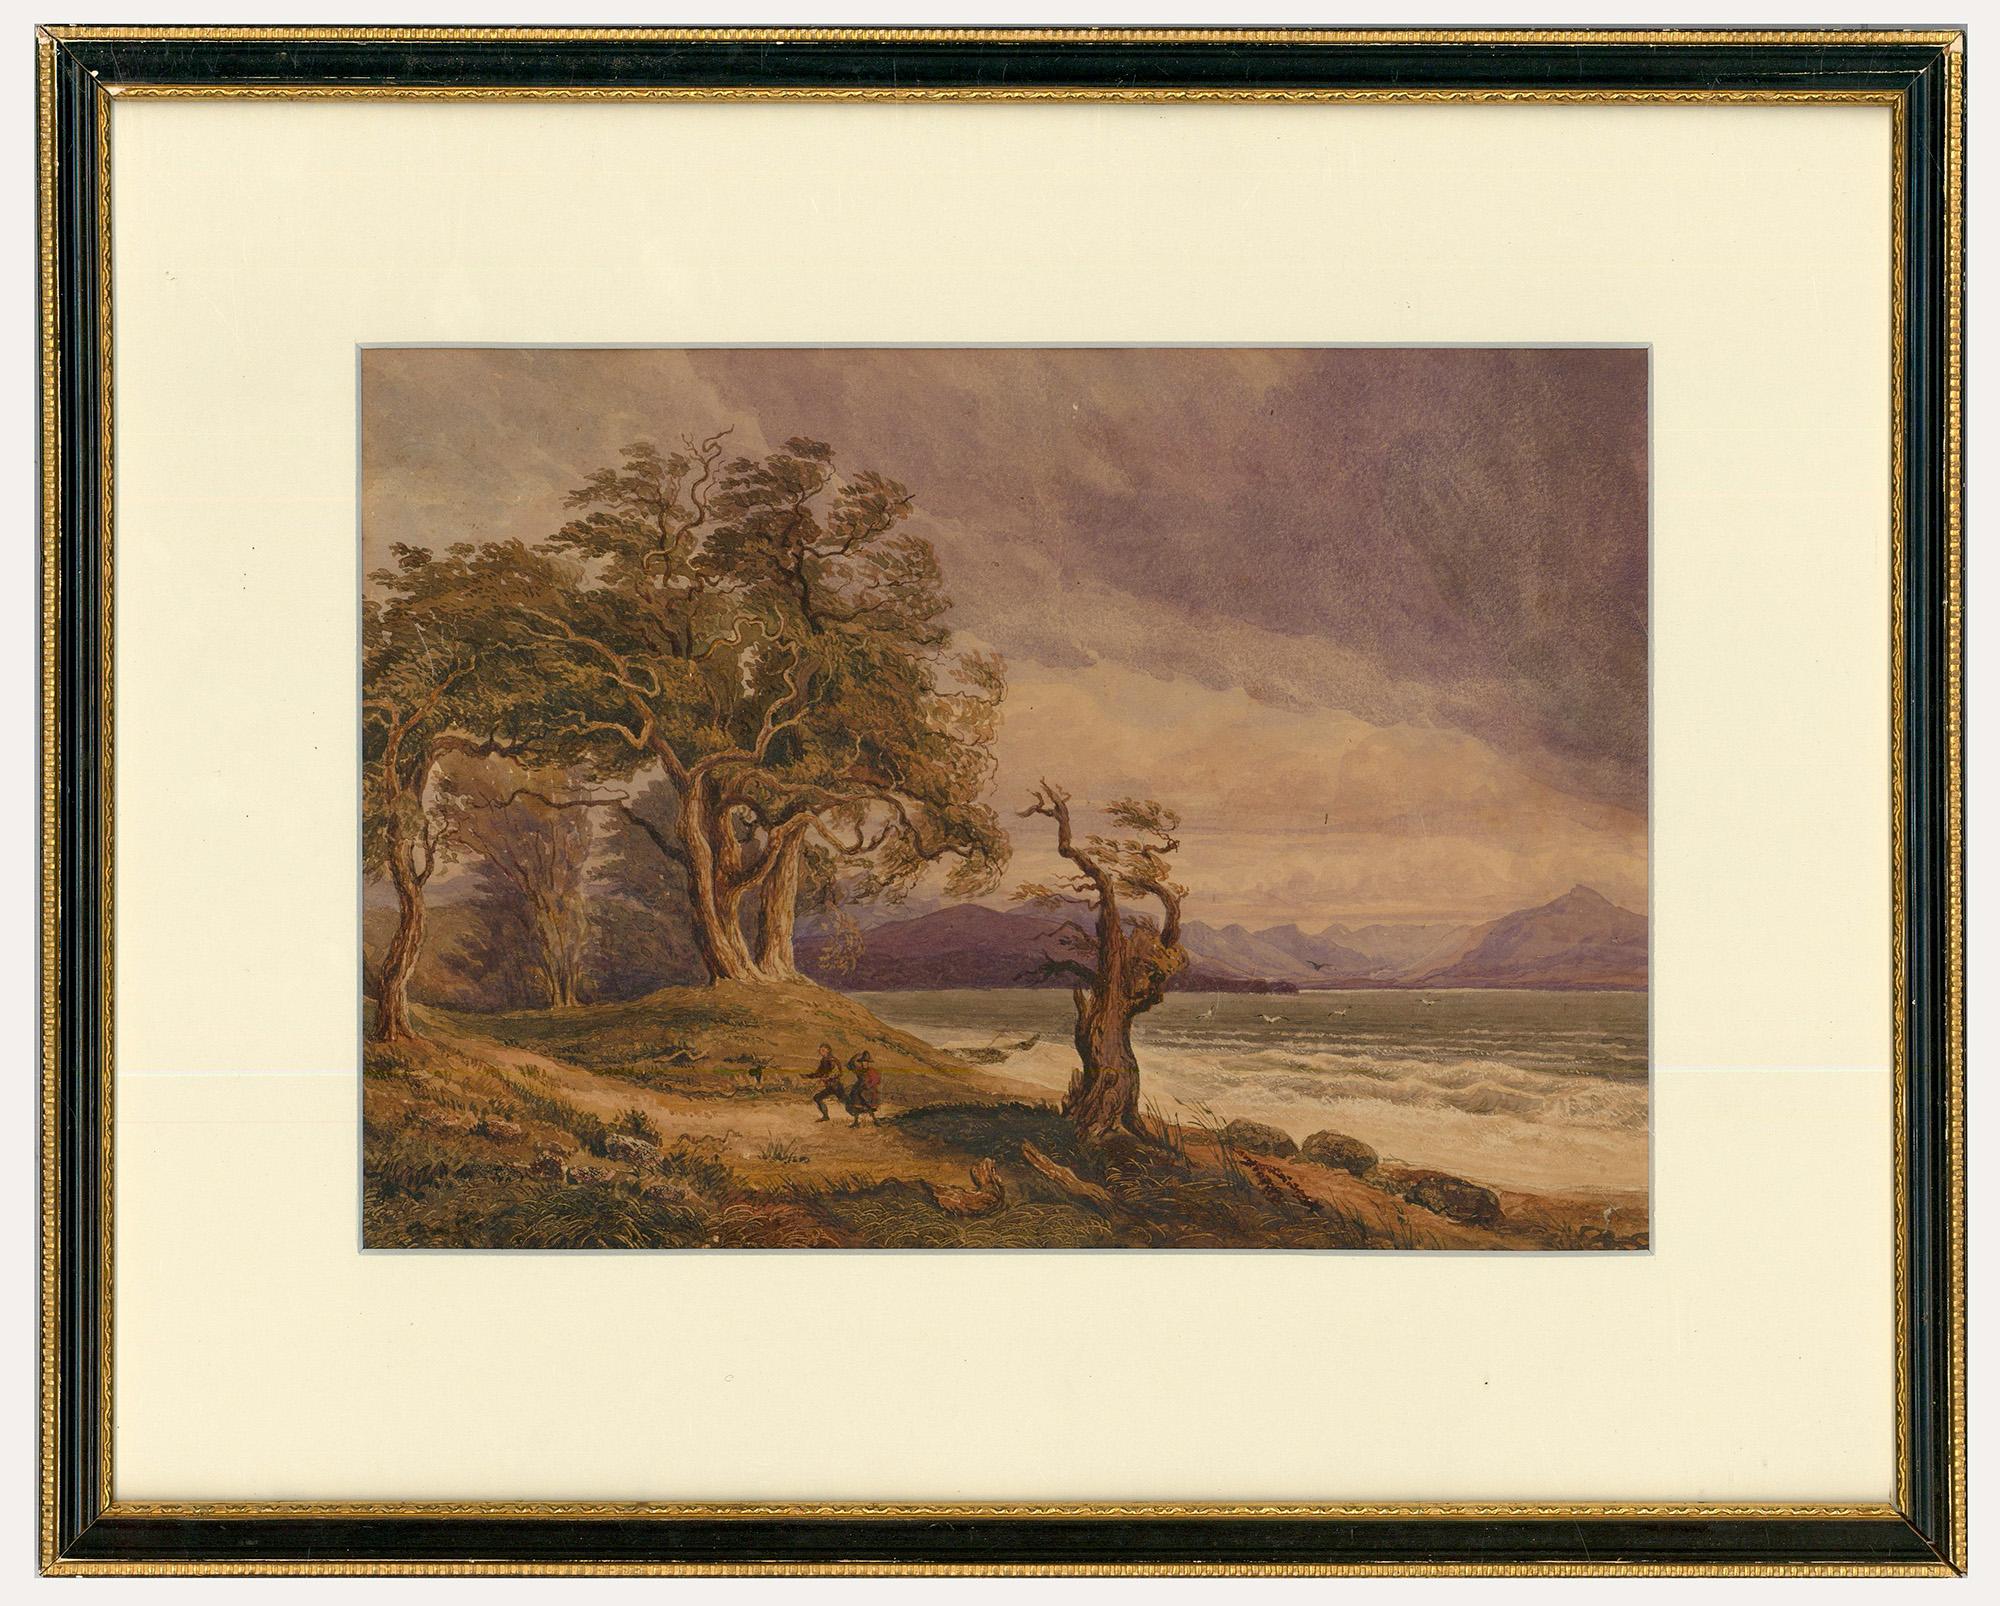 Unknown Landscape Art - Early 19th Century Watercolour - A Windy Walk by the Loch